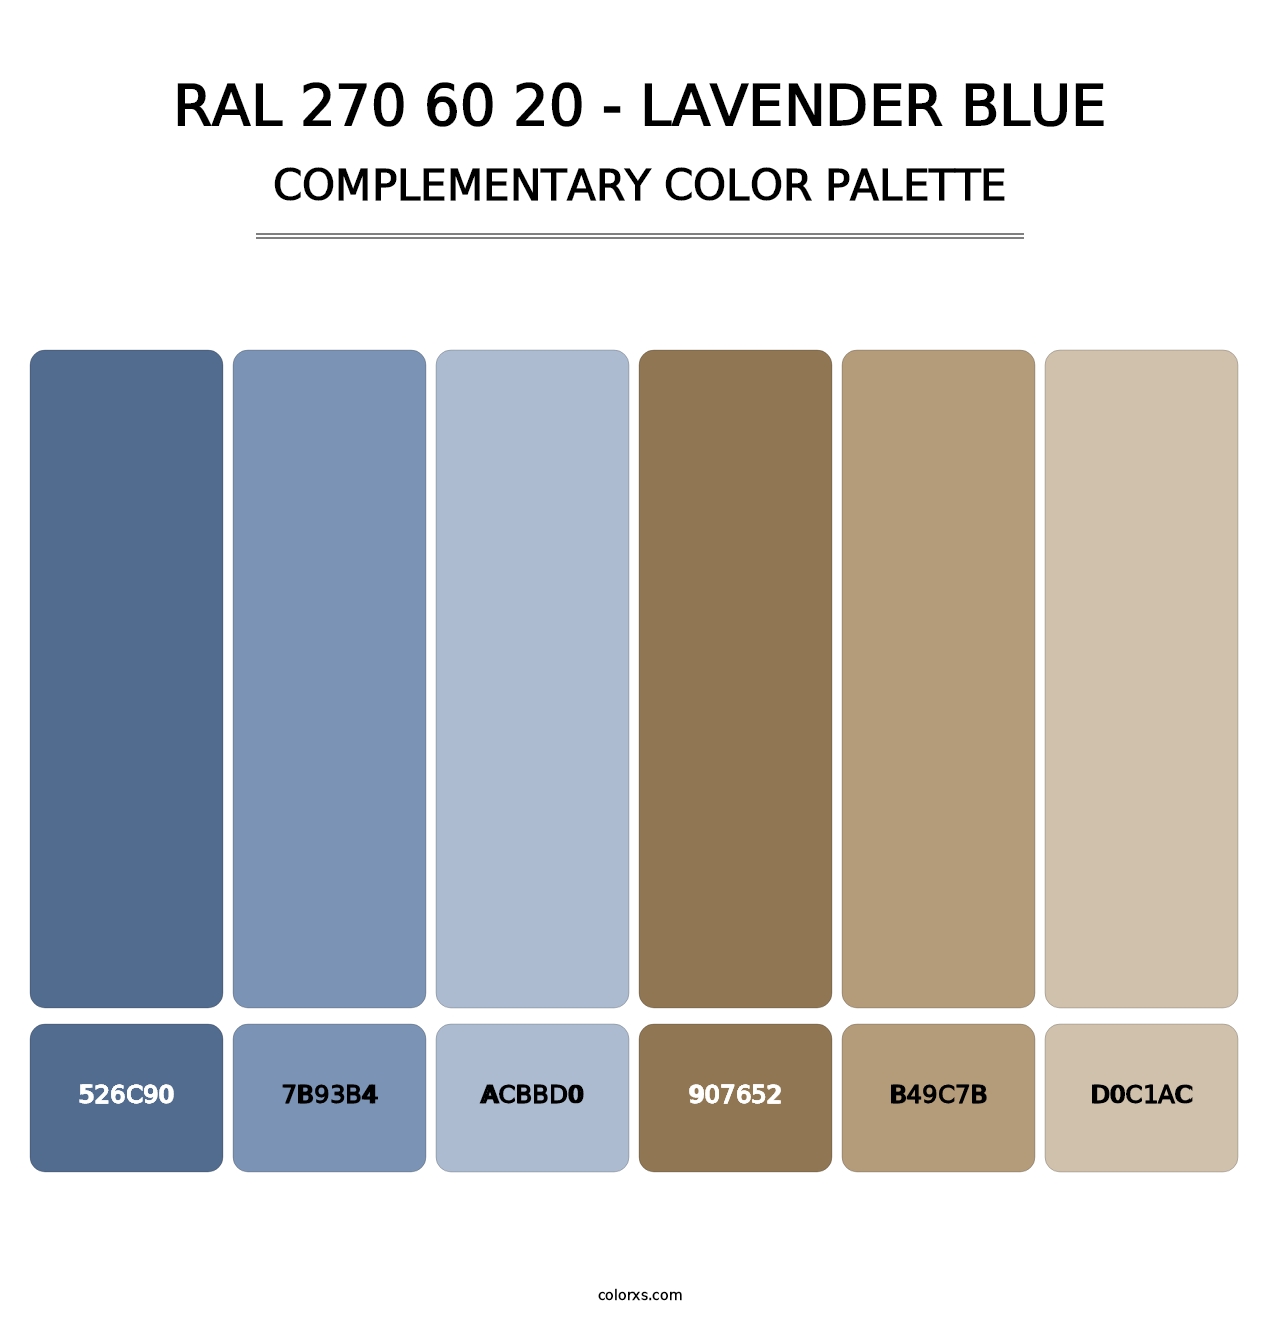 RAL 270 60 20 - Lavender Blue - Complementary Color Palette